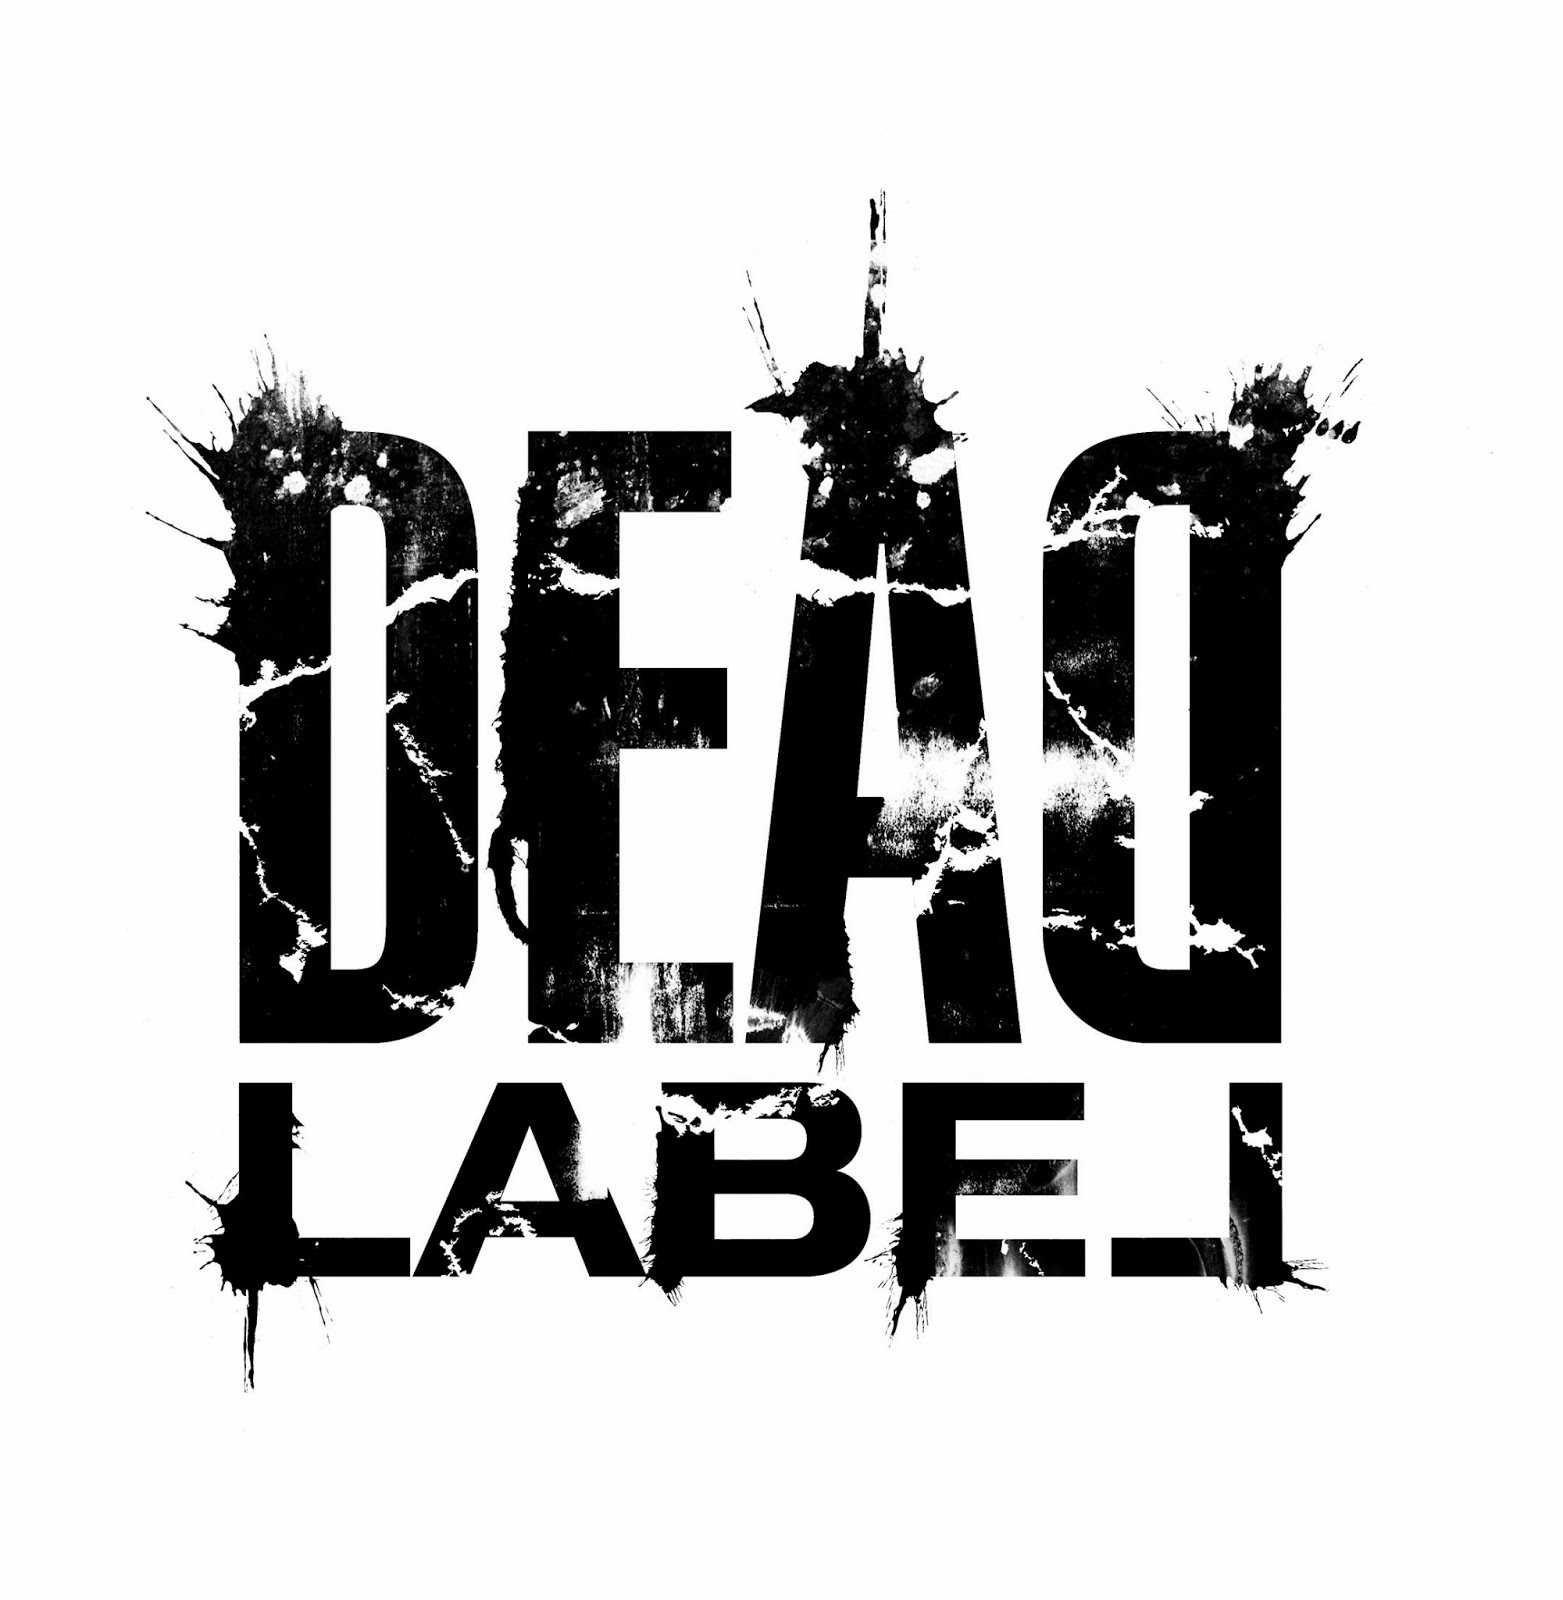 Dead Label’s Dan O’ Grady says New Music is Coming Soon